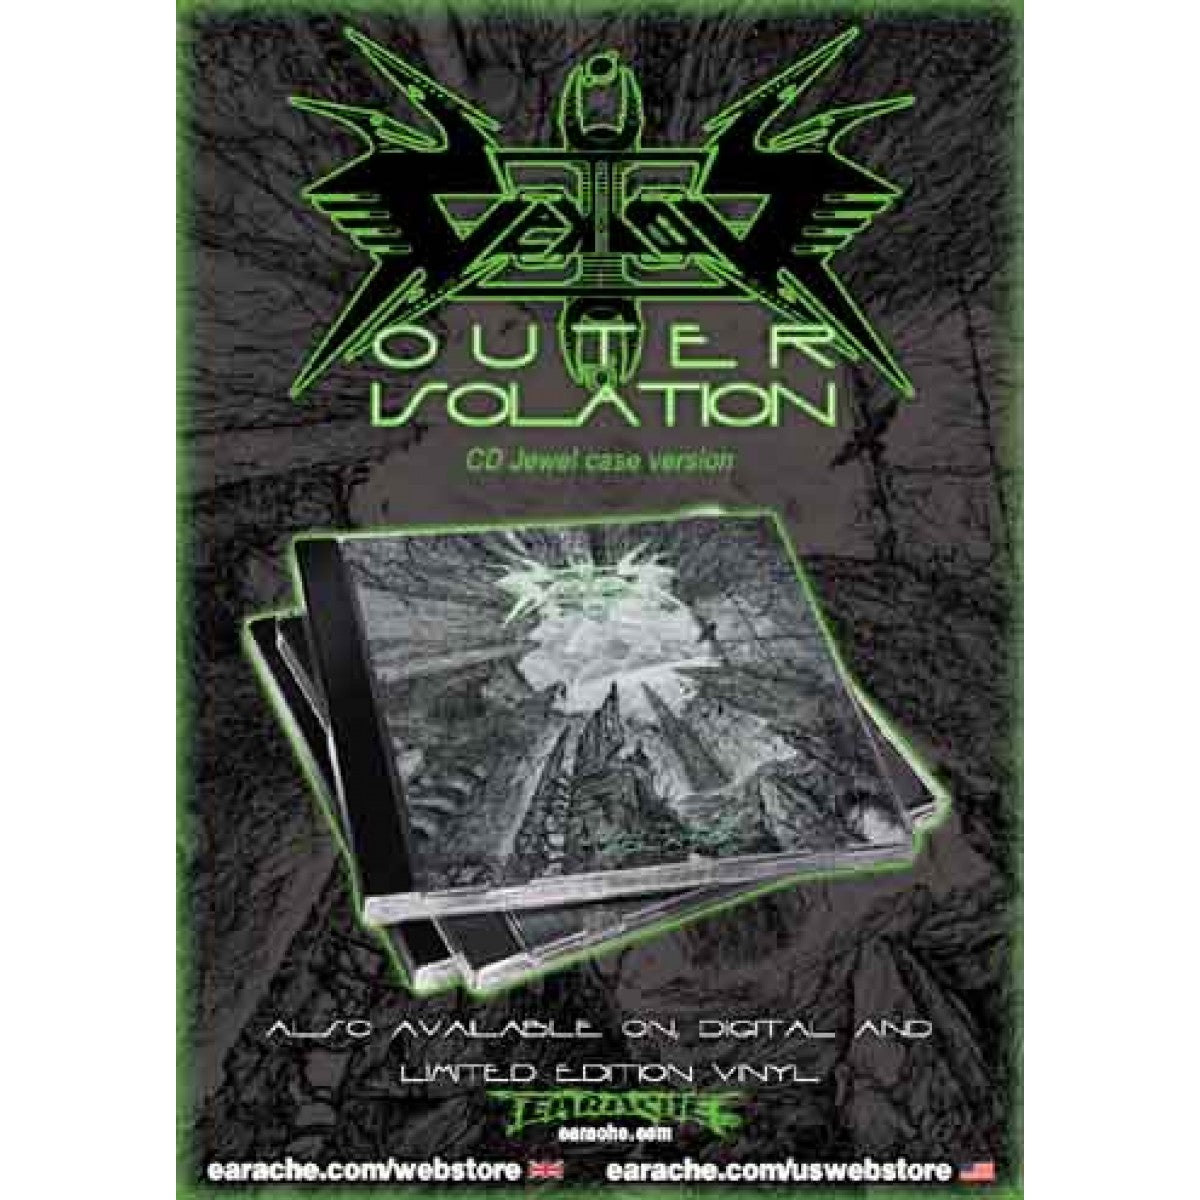 Vektor "Outer Isolation" CD